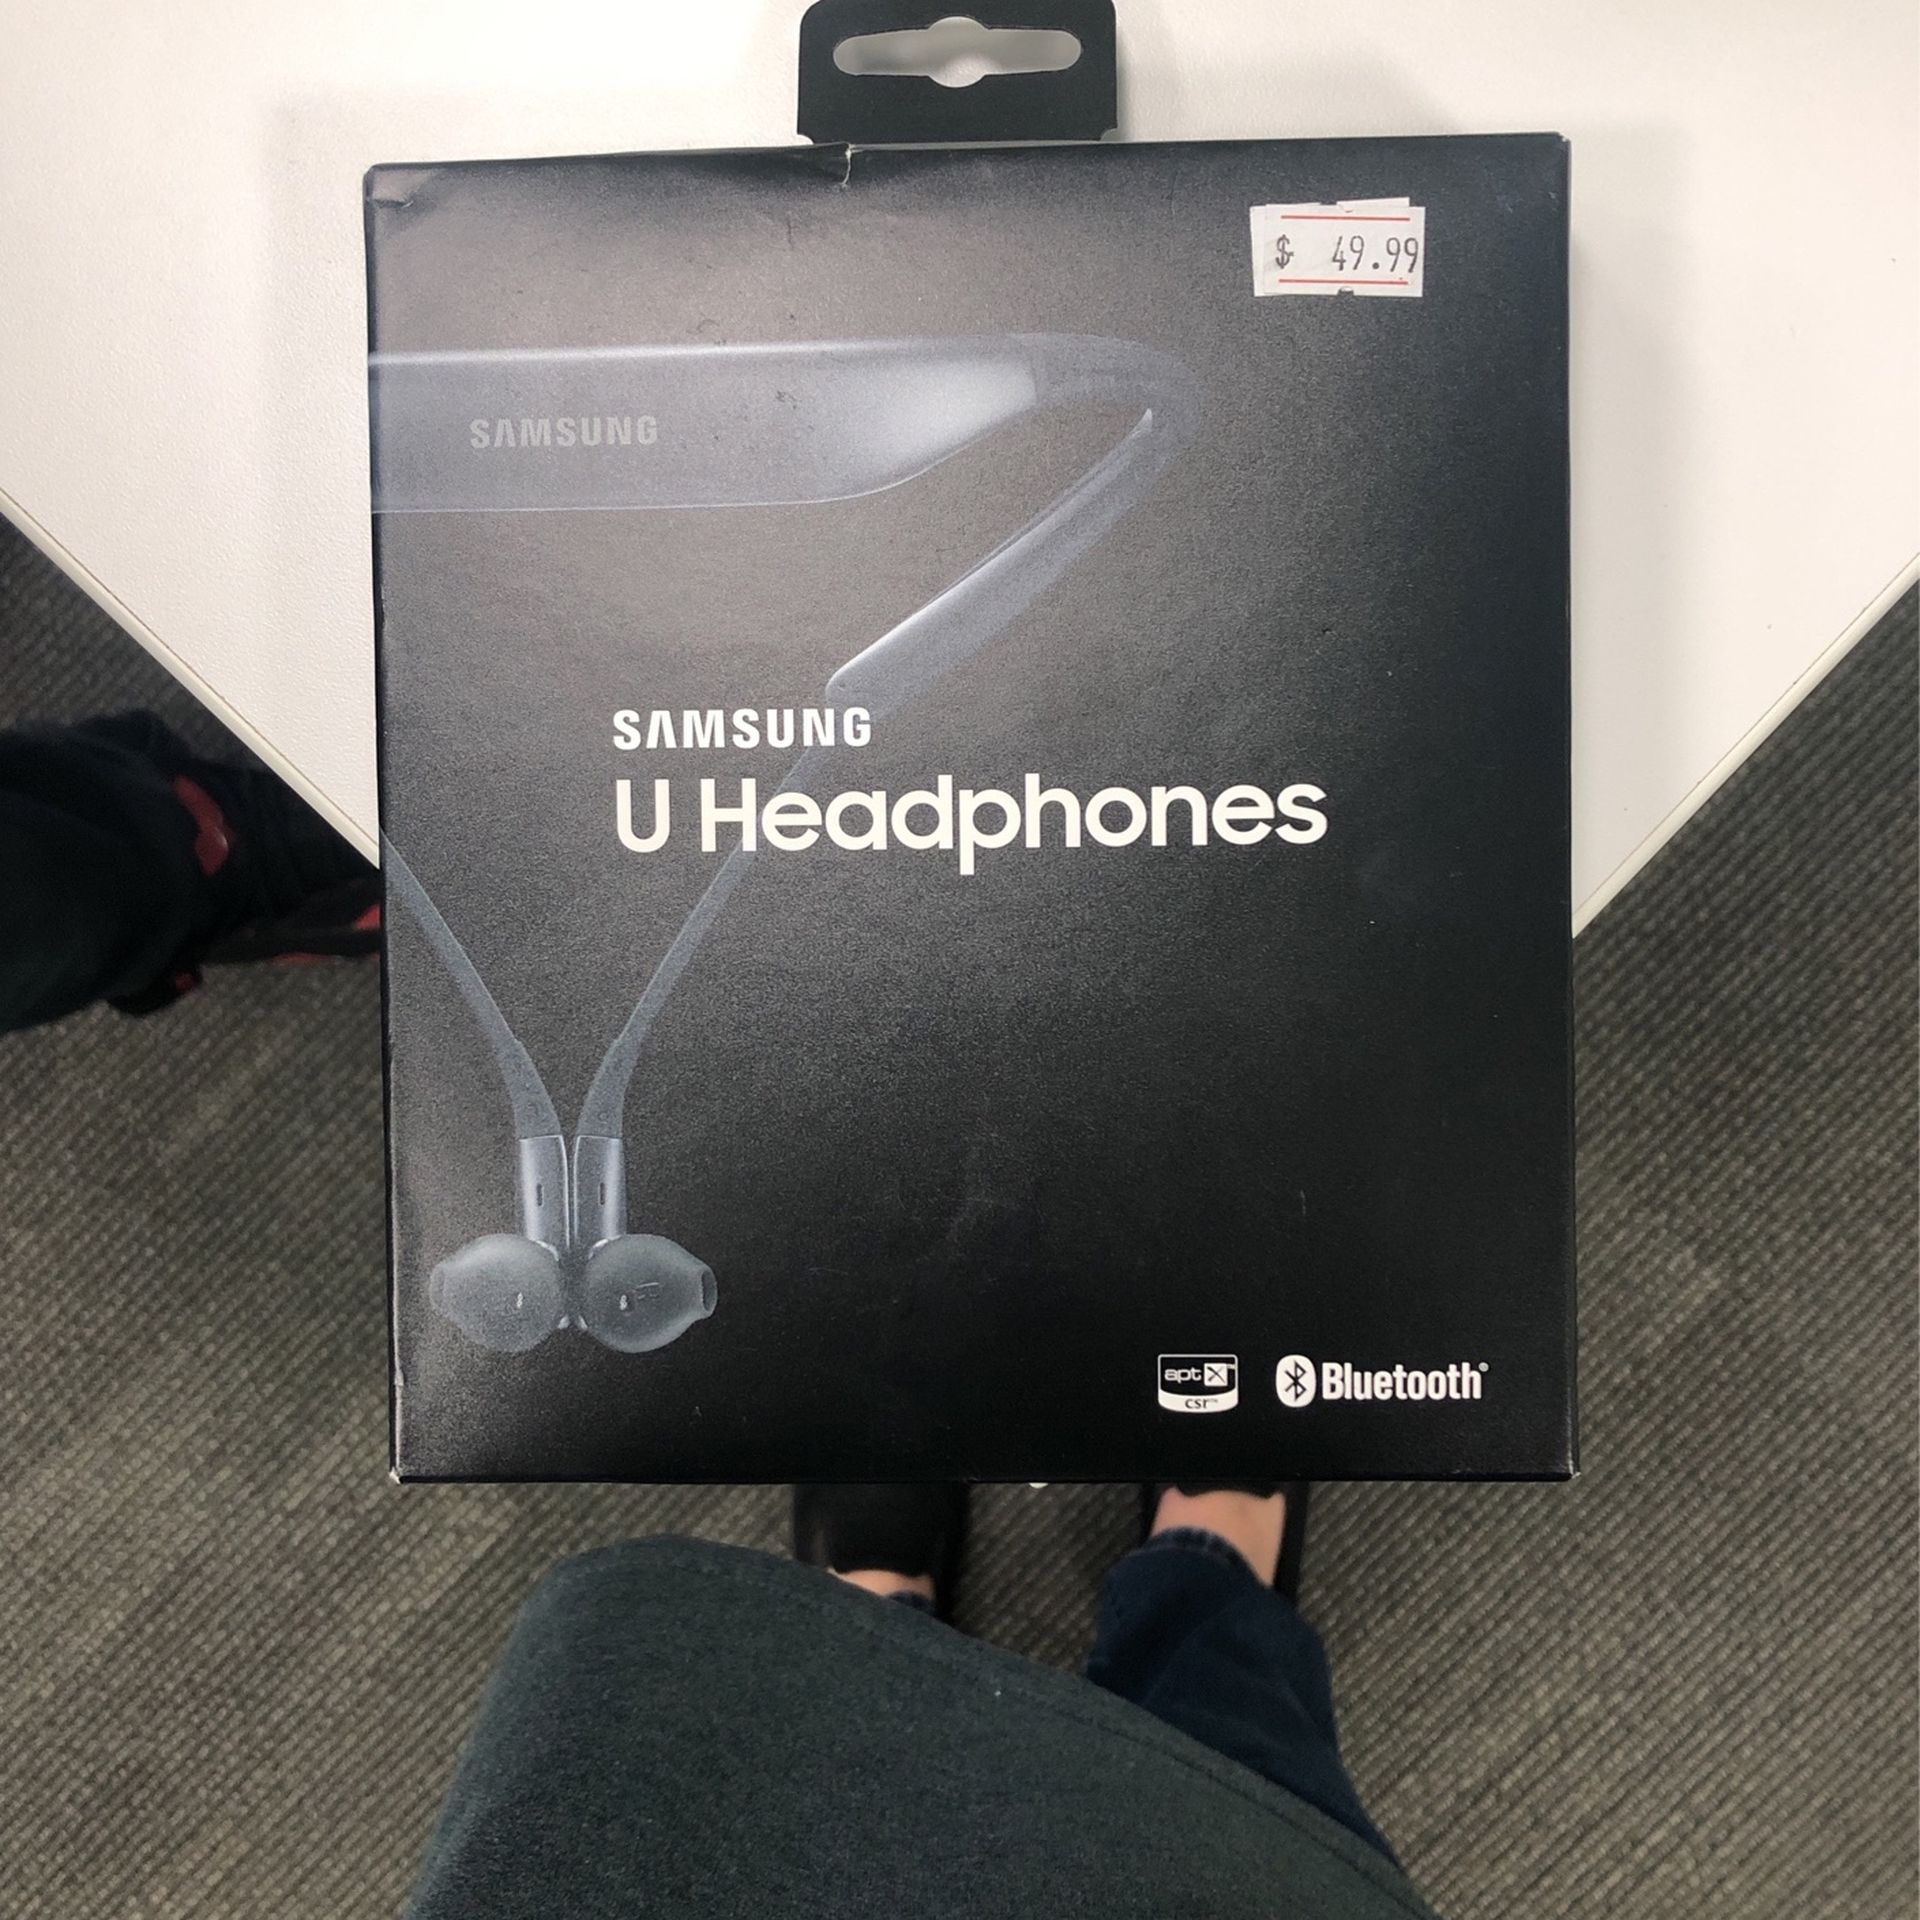 Samsung U Headphones